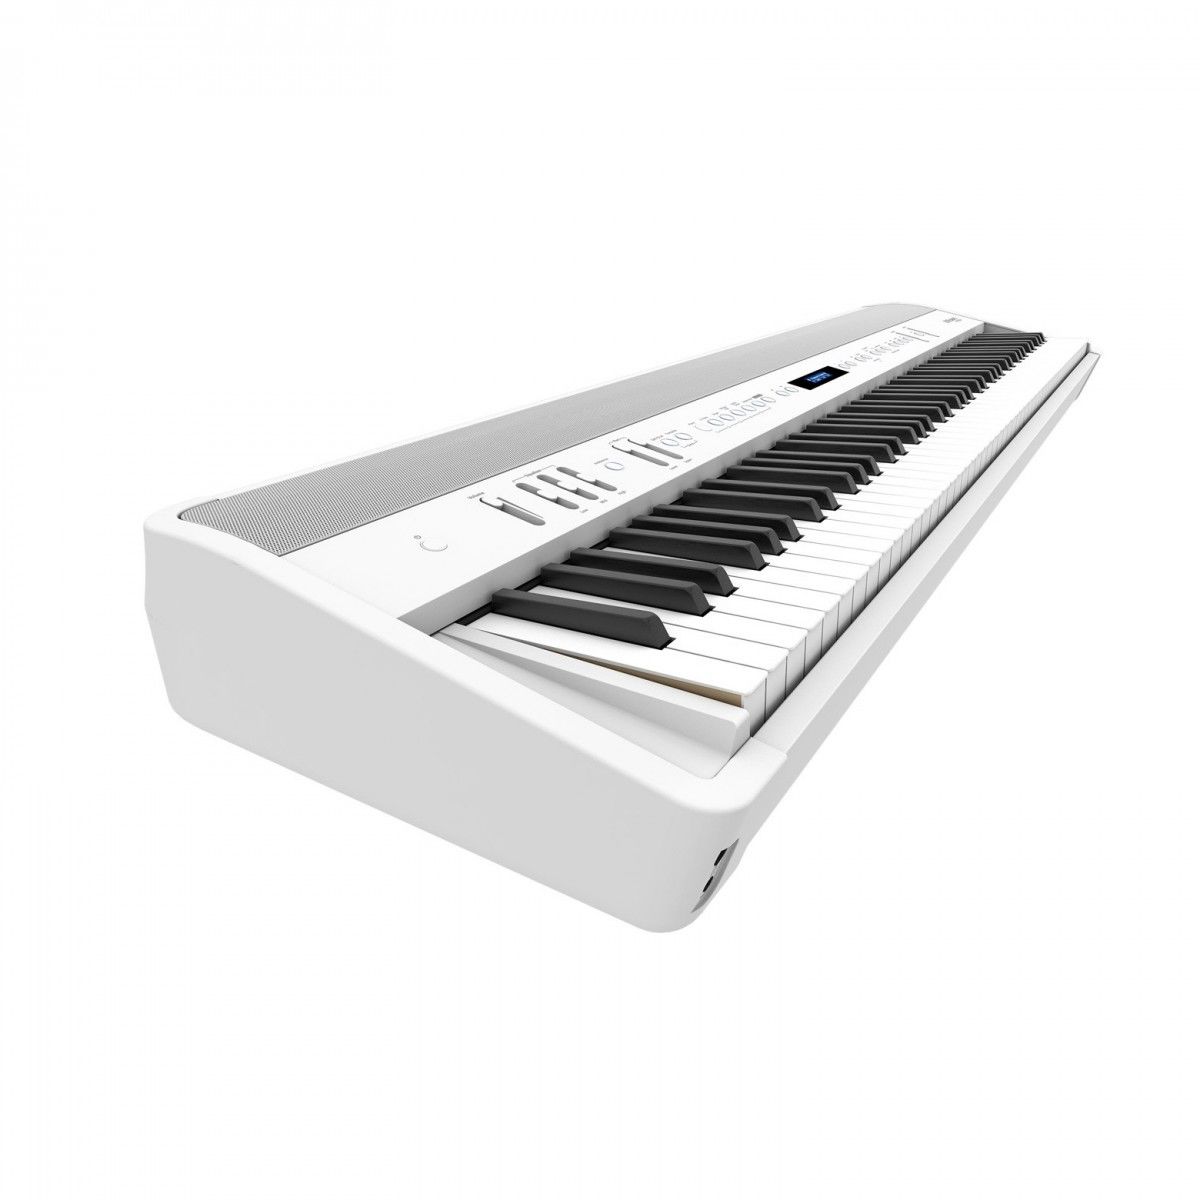 Цифровое пианино ROLAND FP-90X-WH